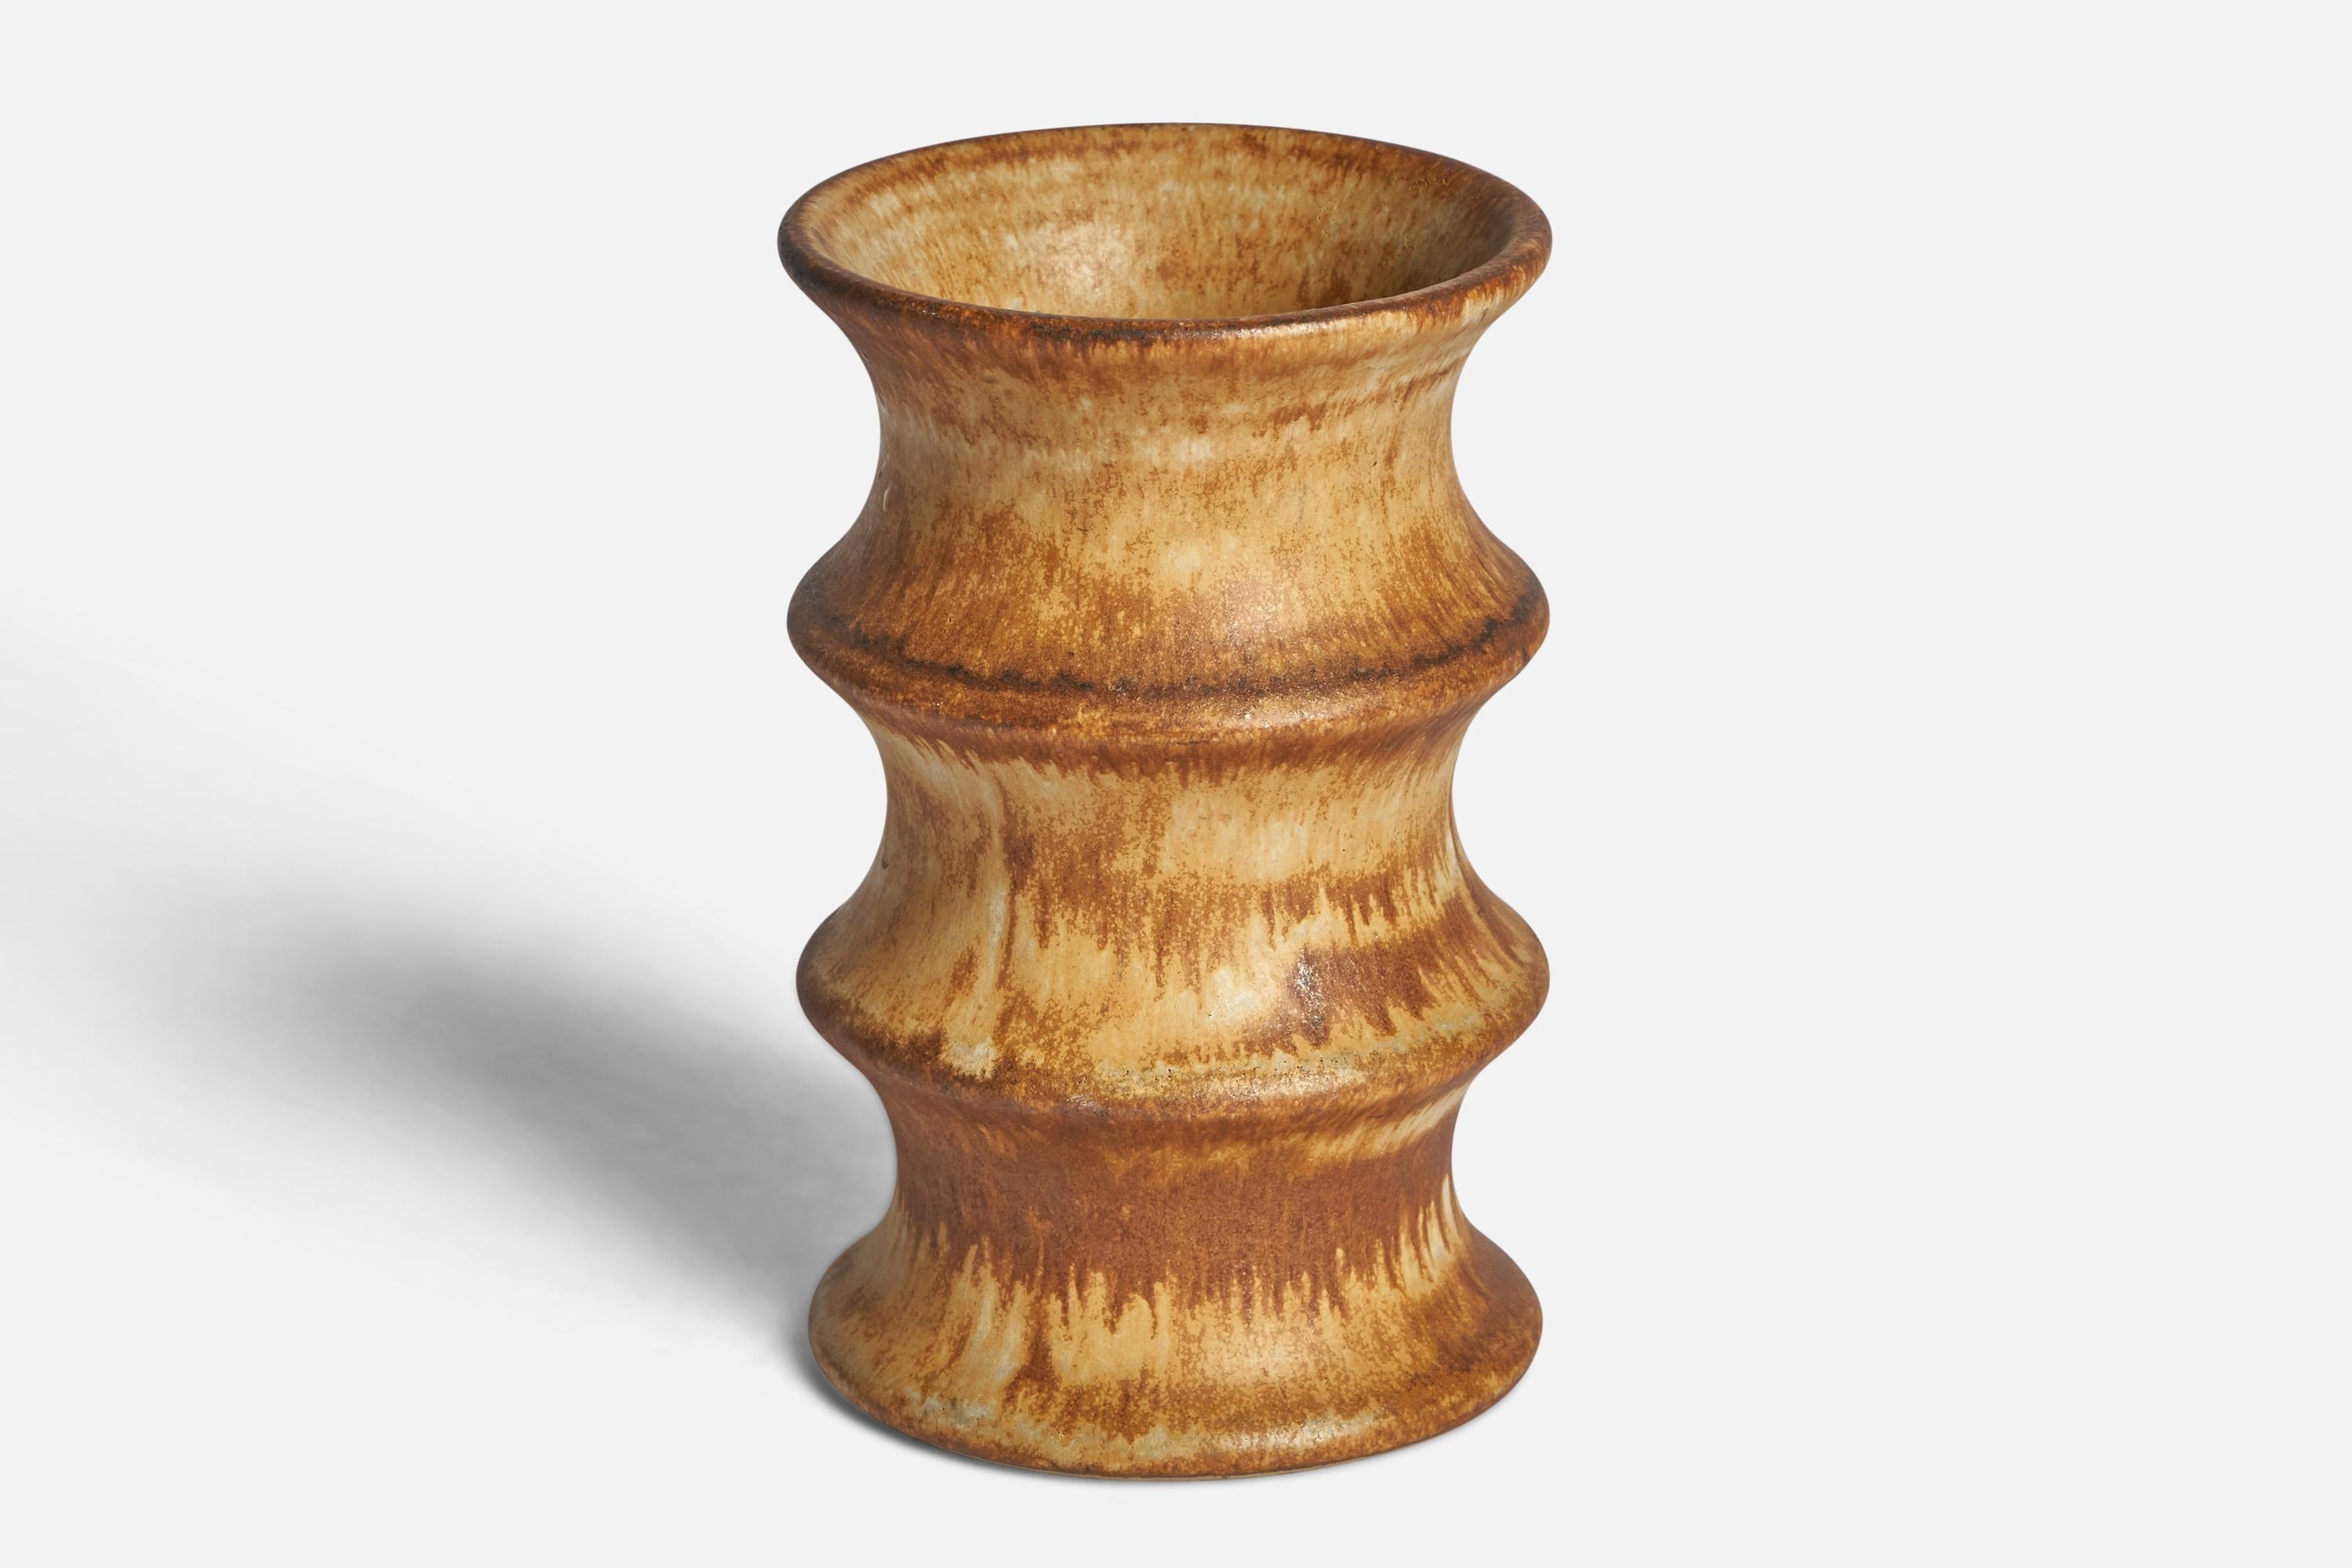 A beige brown-glazed stoneware vase designed by Bruno Karlsson and produced by Ego Stengods, Sweden, c. 1960s.